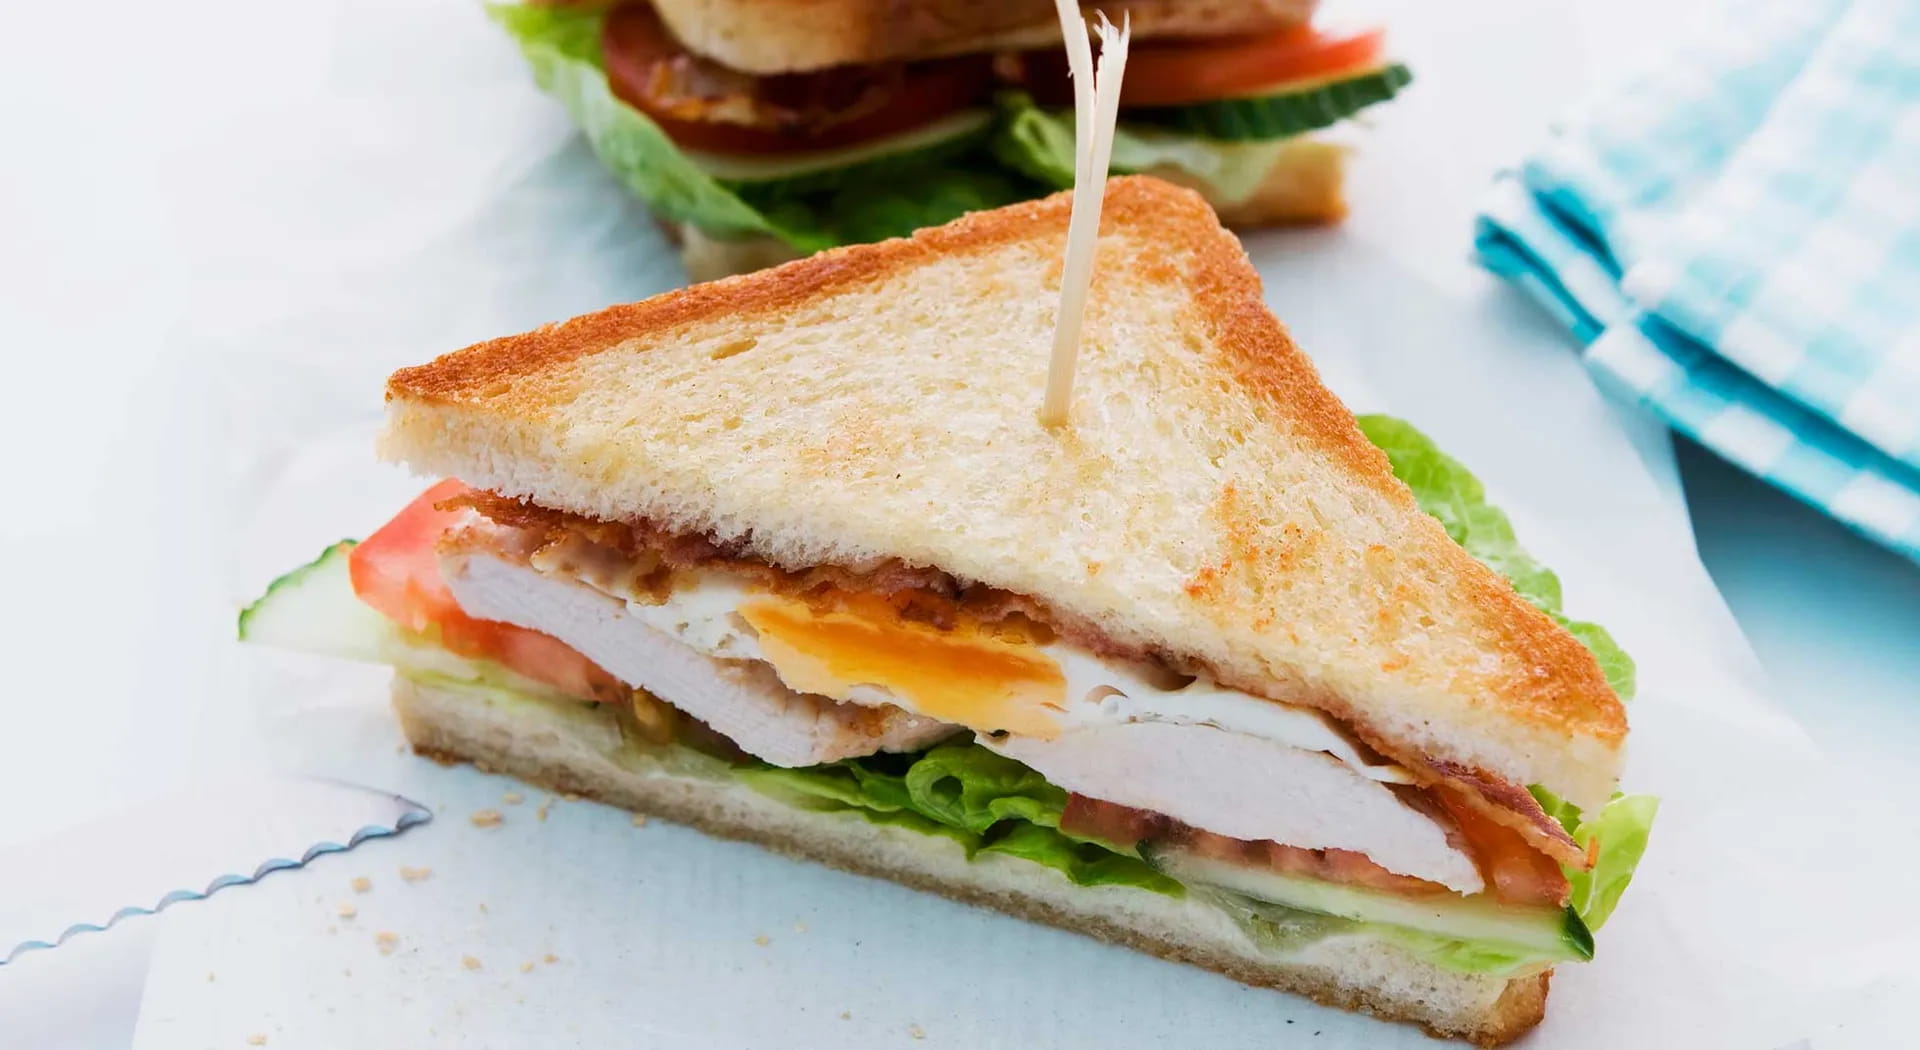 Always fresh sandwiches? Here's the secret!